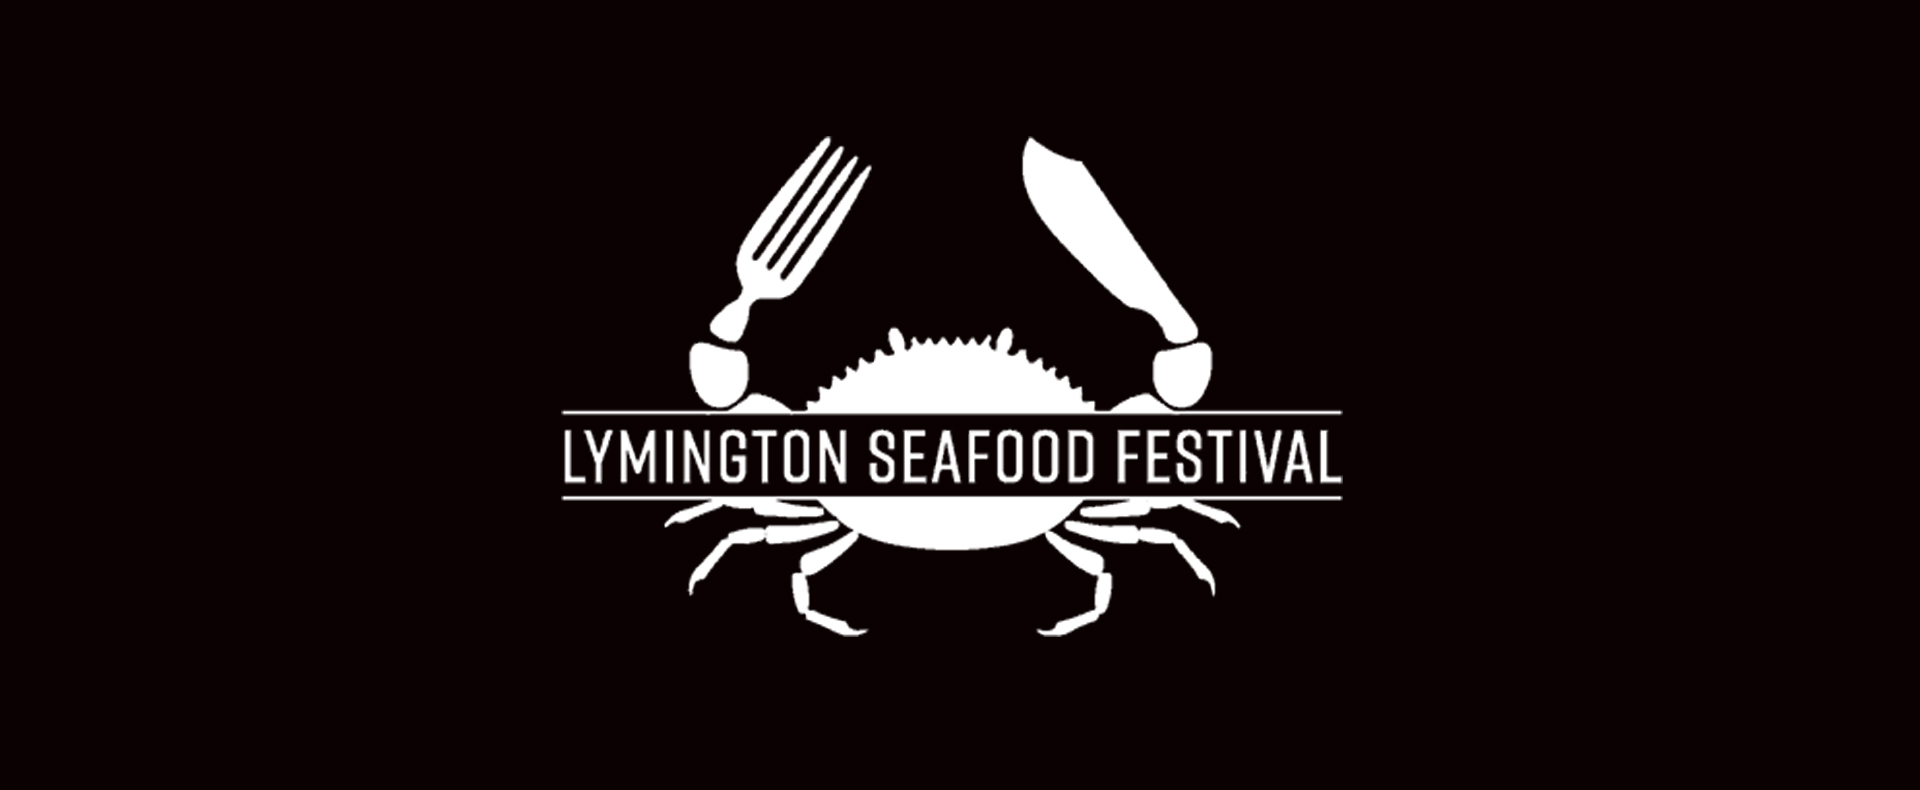 Lymington seafood festival